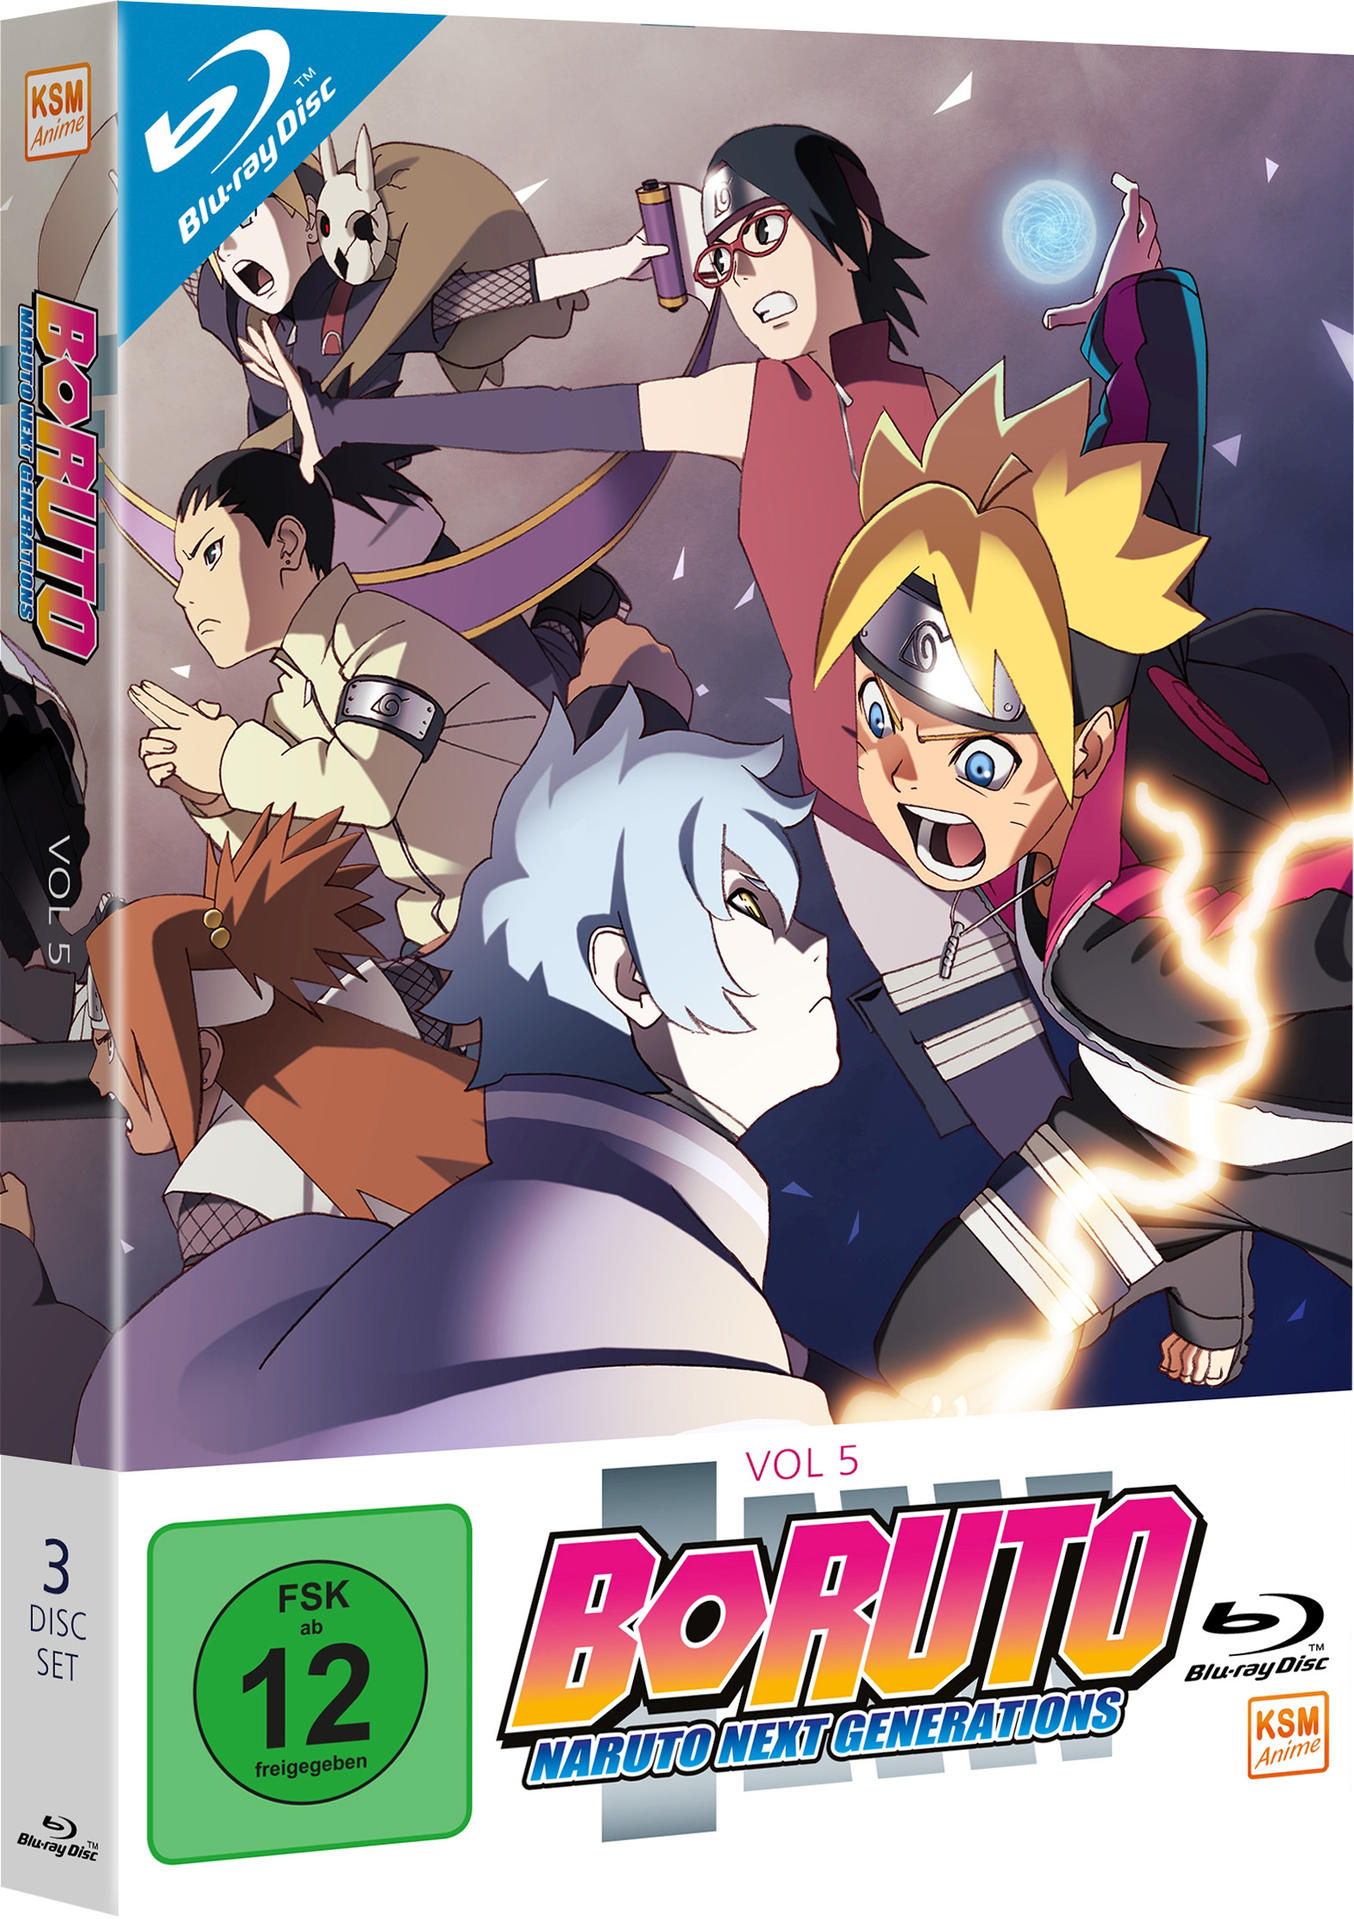 5 Boruto: Volume Generations Next - Naruto Blu-ray (Episode 71-92)